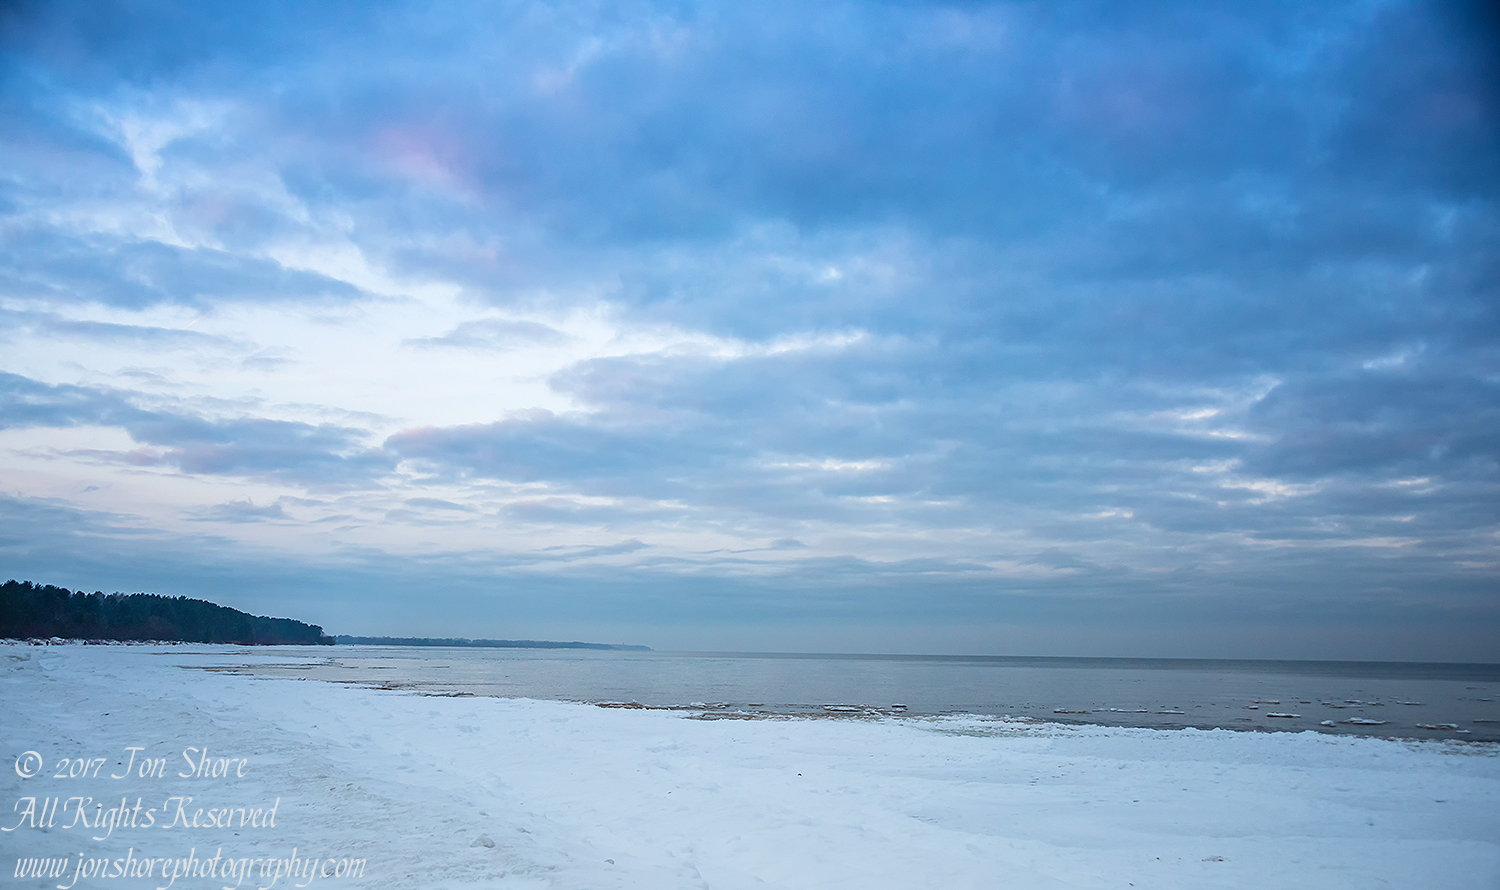 Winter at a Baltic Sea Beach. Nikkor 28mm